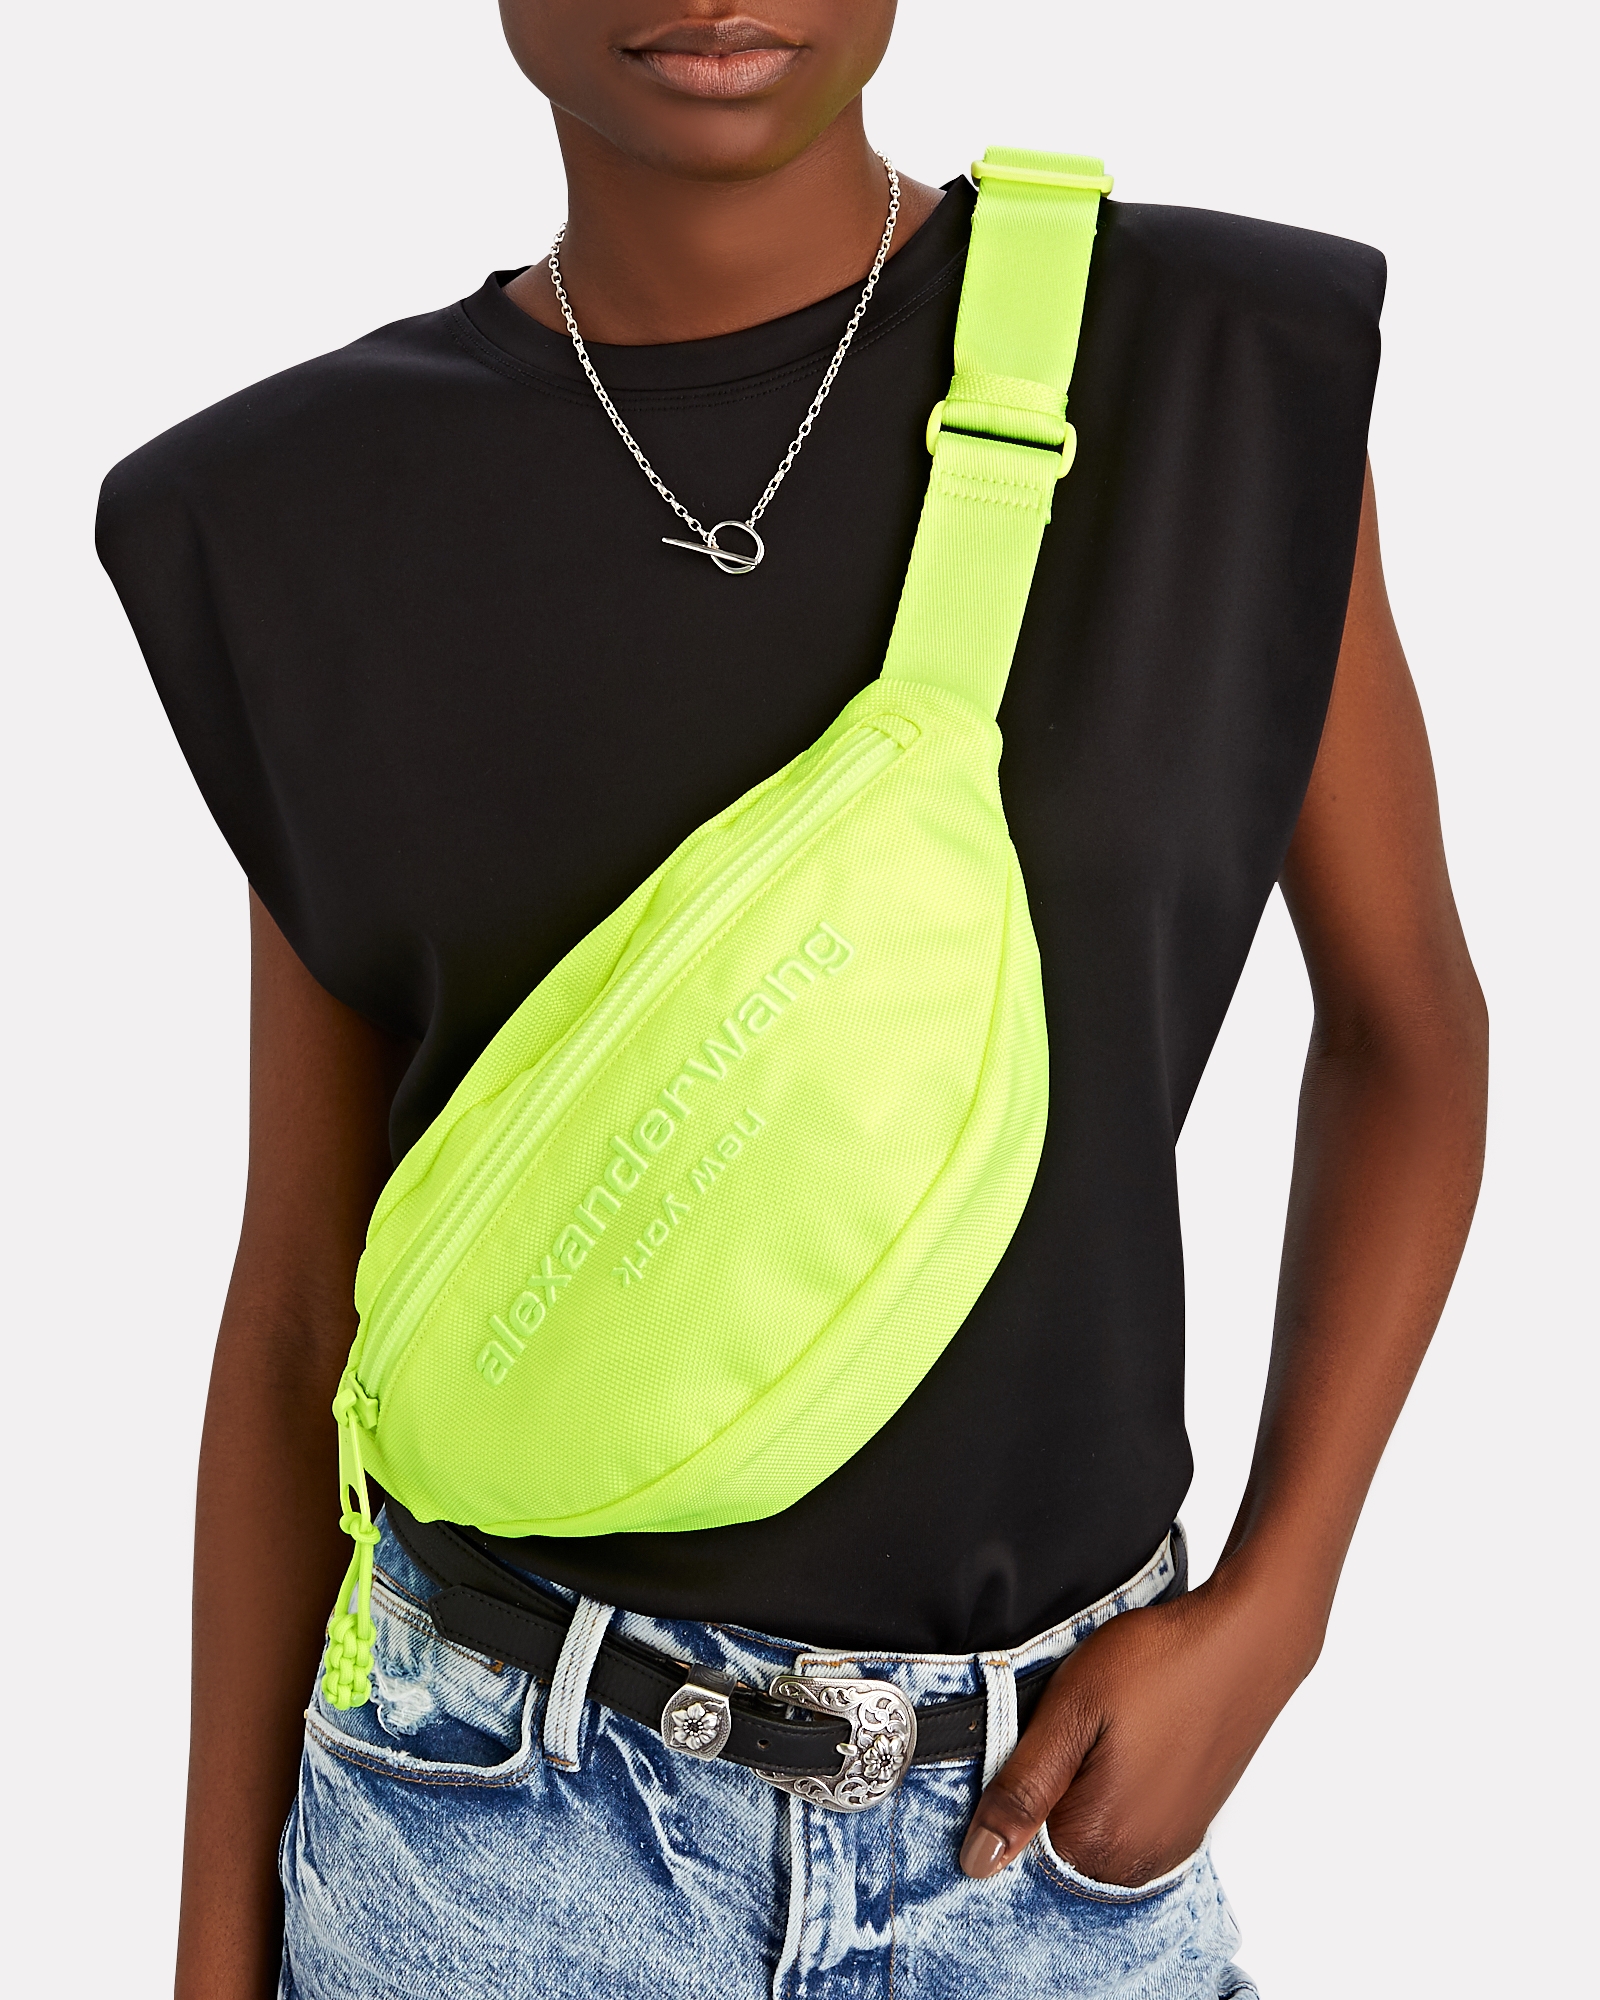 Alexander Wang Primal Nylon Shoulder Bag | INTERMIX®